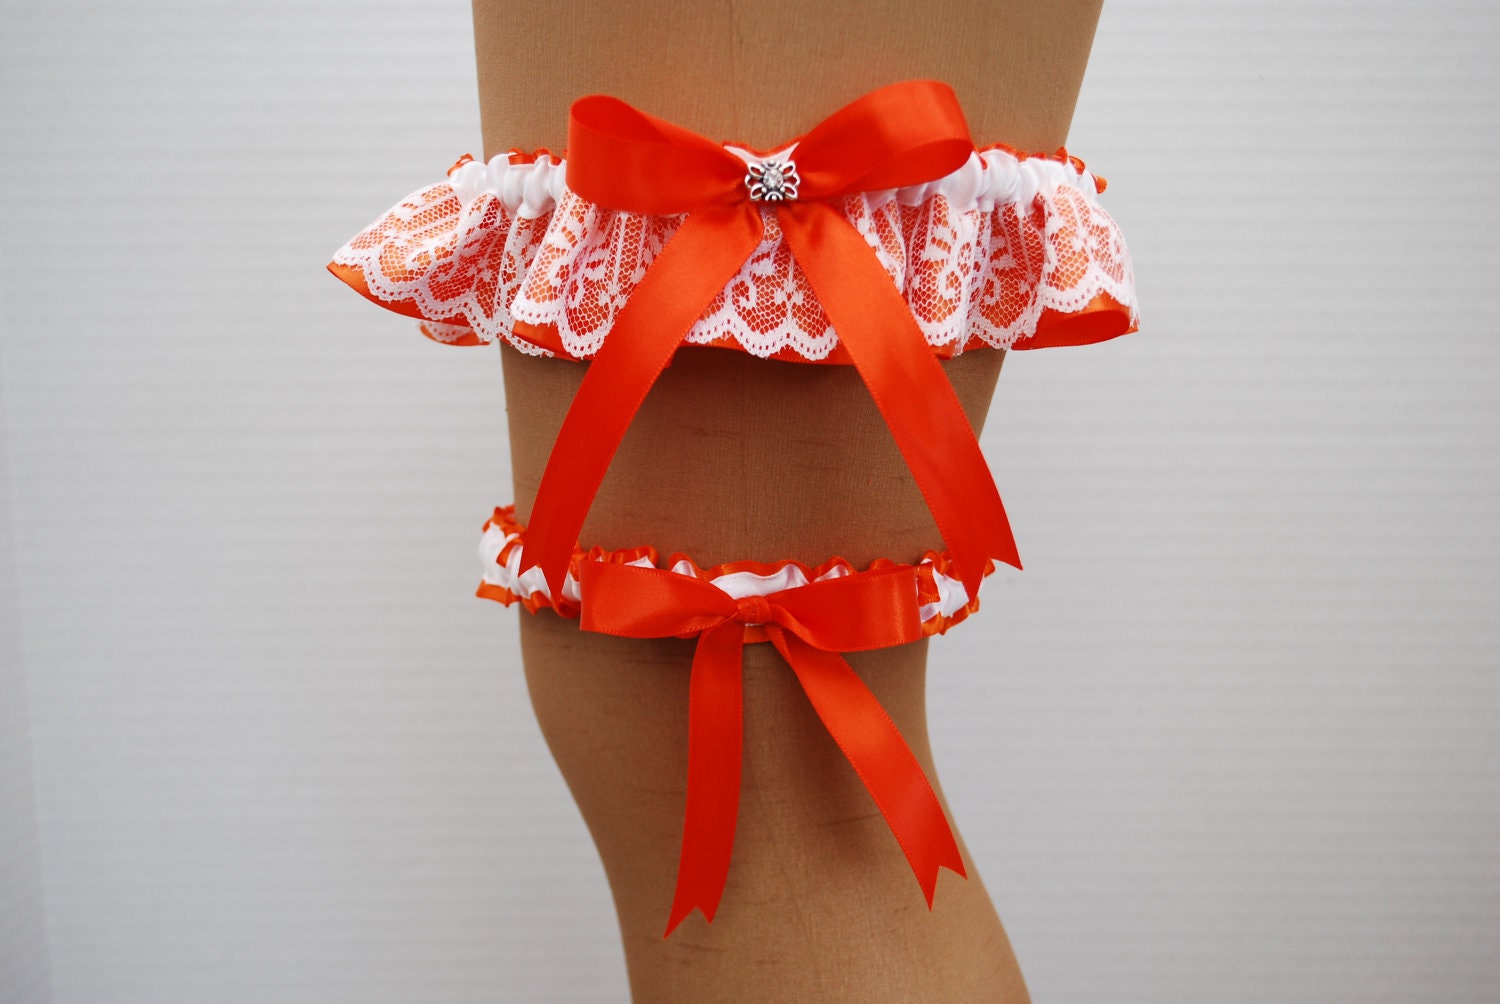 Wedding Garter Set - Torrid Orange Satin Ribbon with White Lace Overlay and Swarovski Crystal Charm - KimKatDesigns